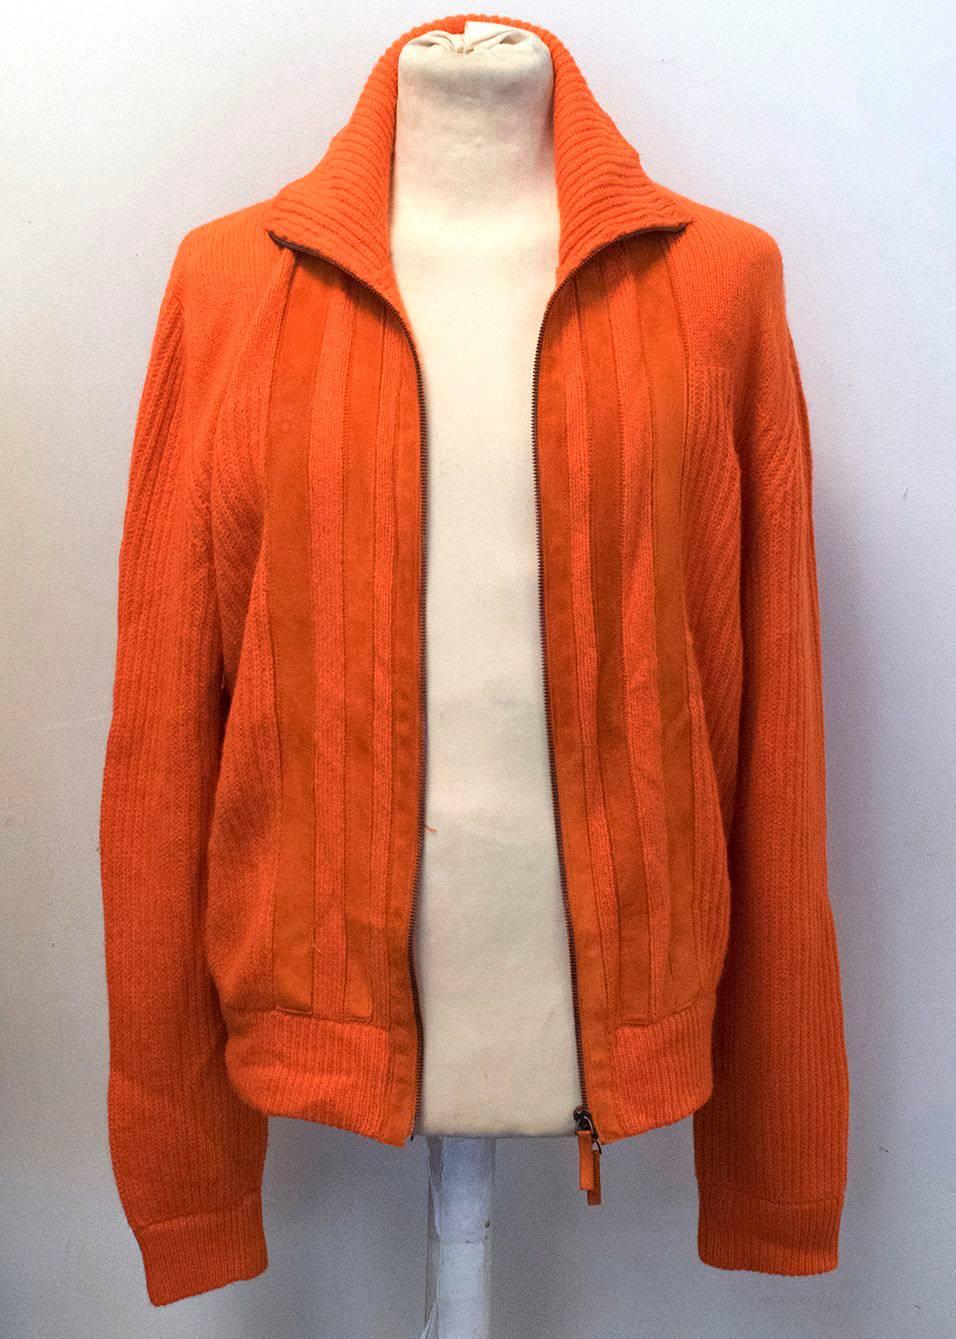 Bottega Veneta Orange Cashmere and Leather Cardigan  For Sale 3